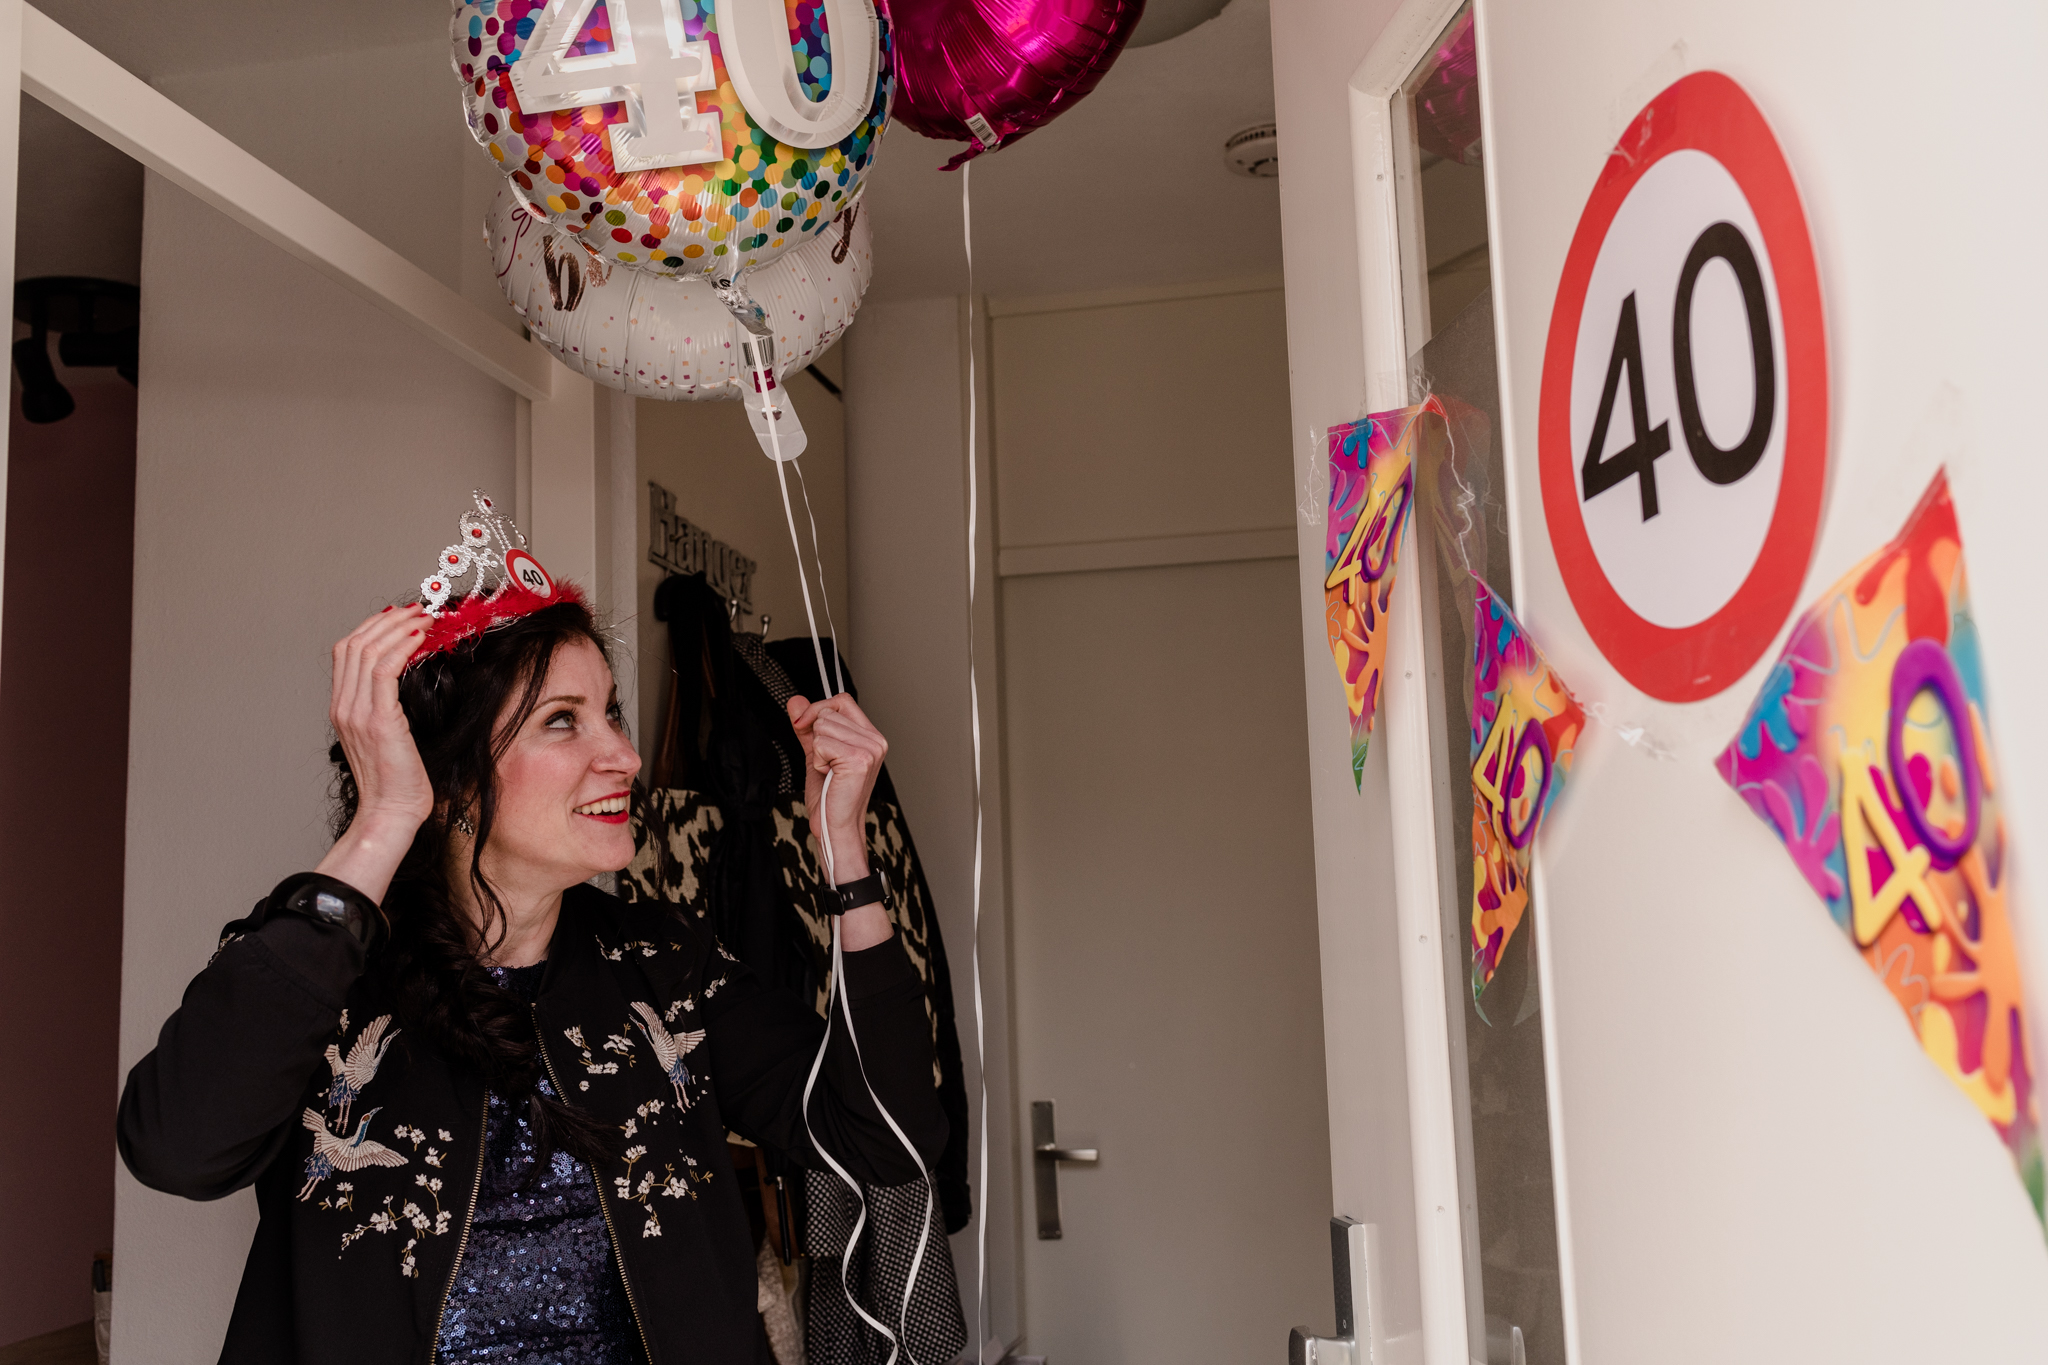 Day in a Life: Tilburgse viert 40ste verjaardag in stijl!